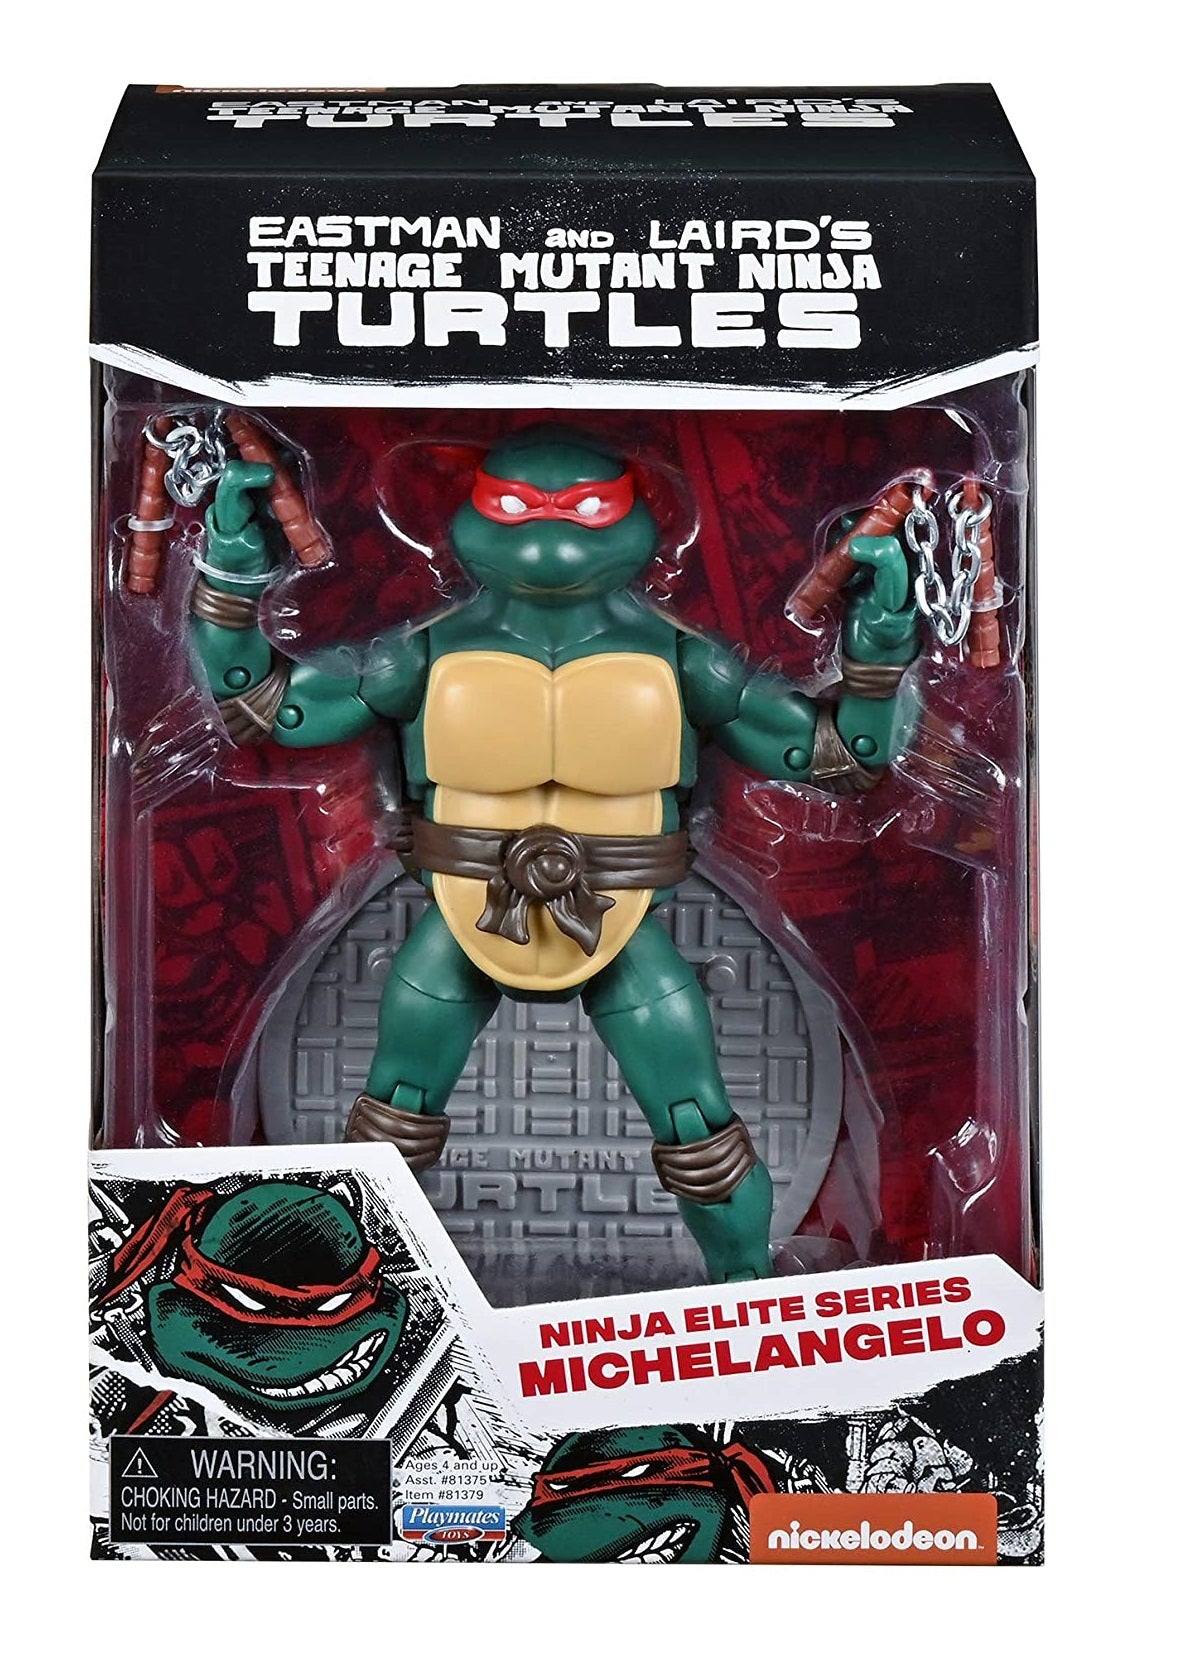 TMNT Ninja Elite Series Michelangelo figure